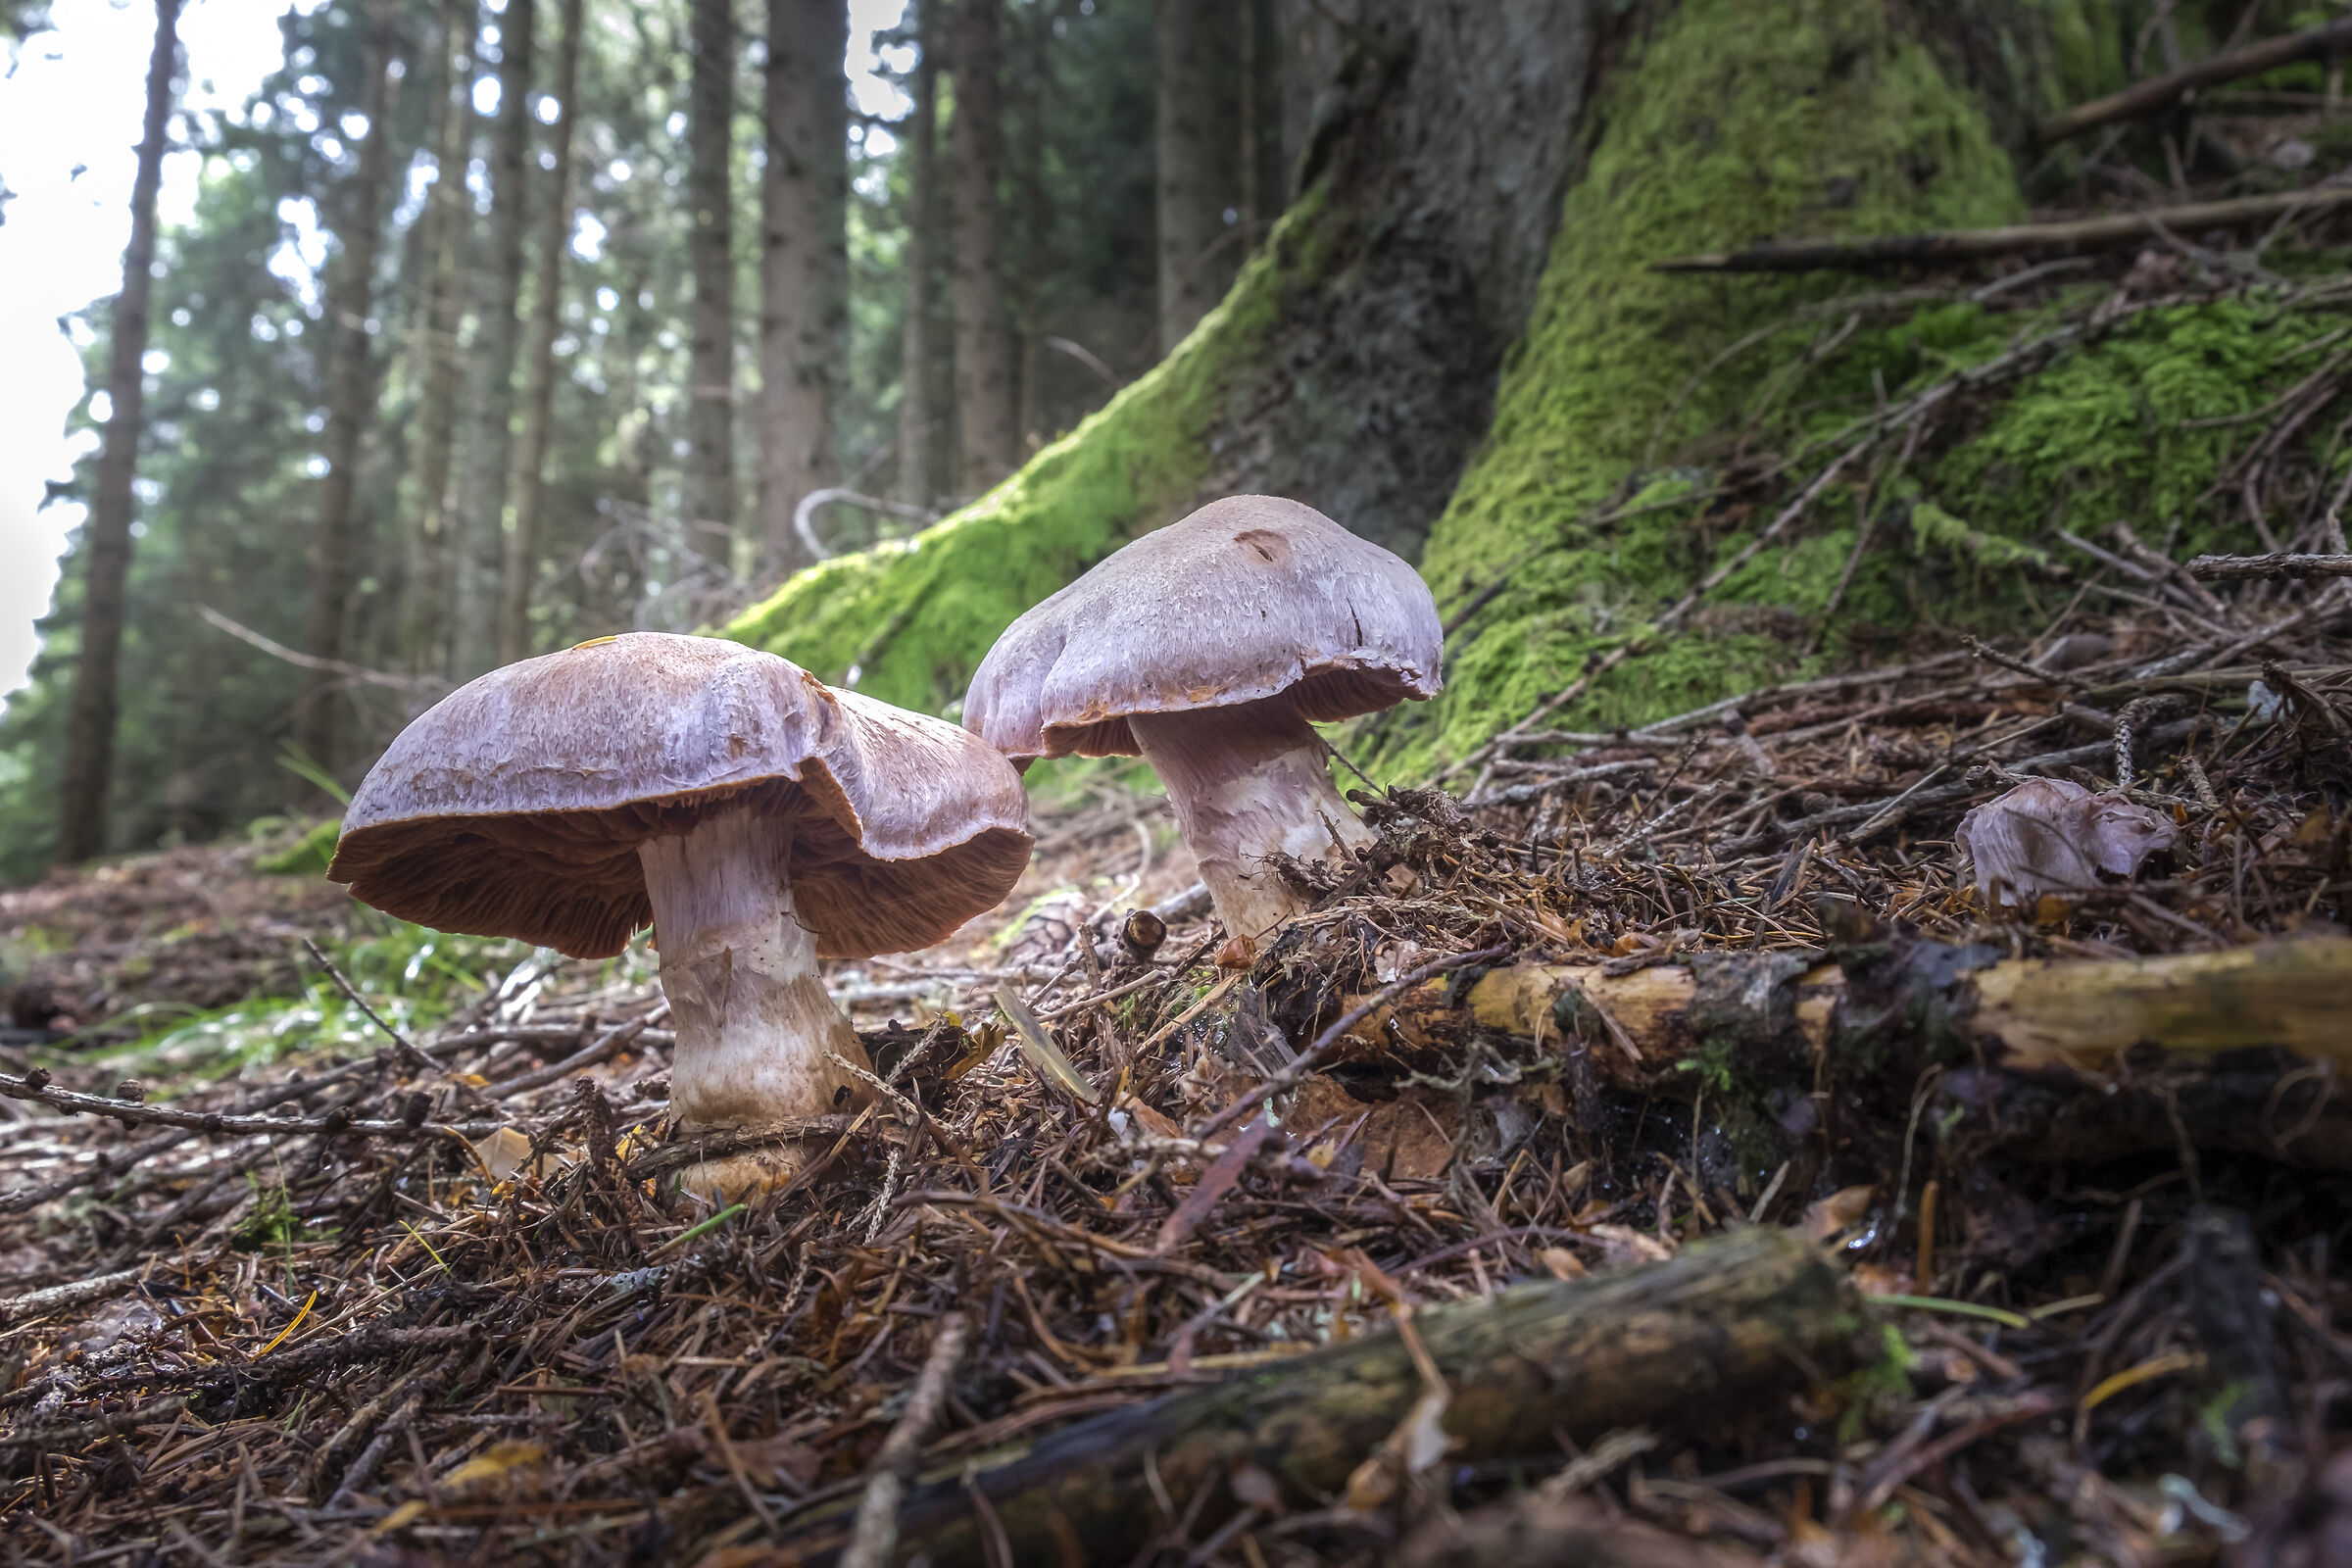 mushrooms in the undergrowth...